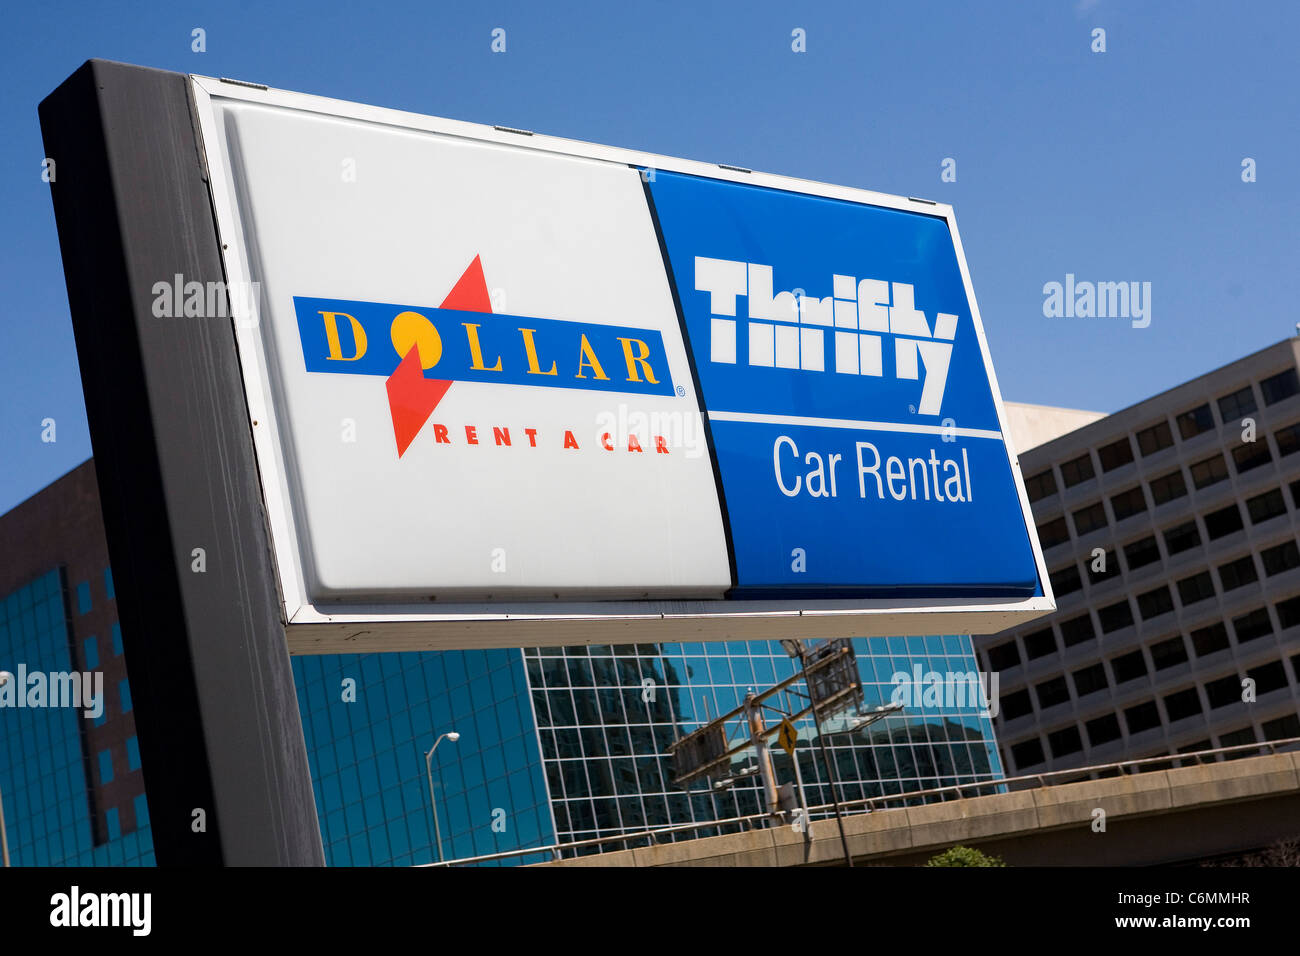 A Dollar Thrifty Car Rental center.  Stock Photo